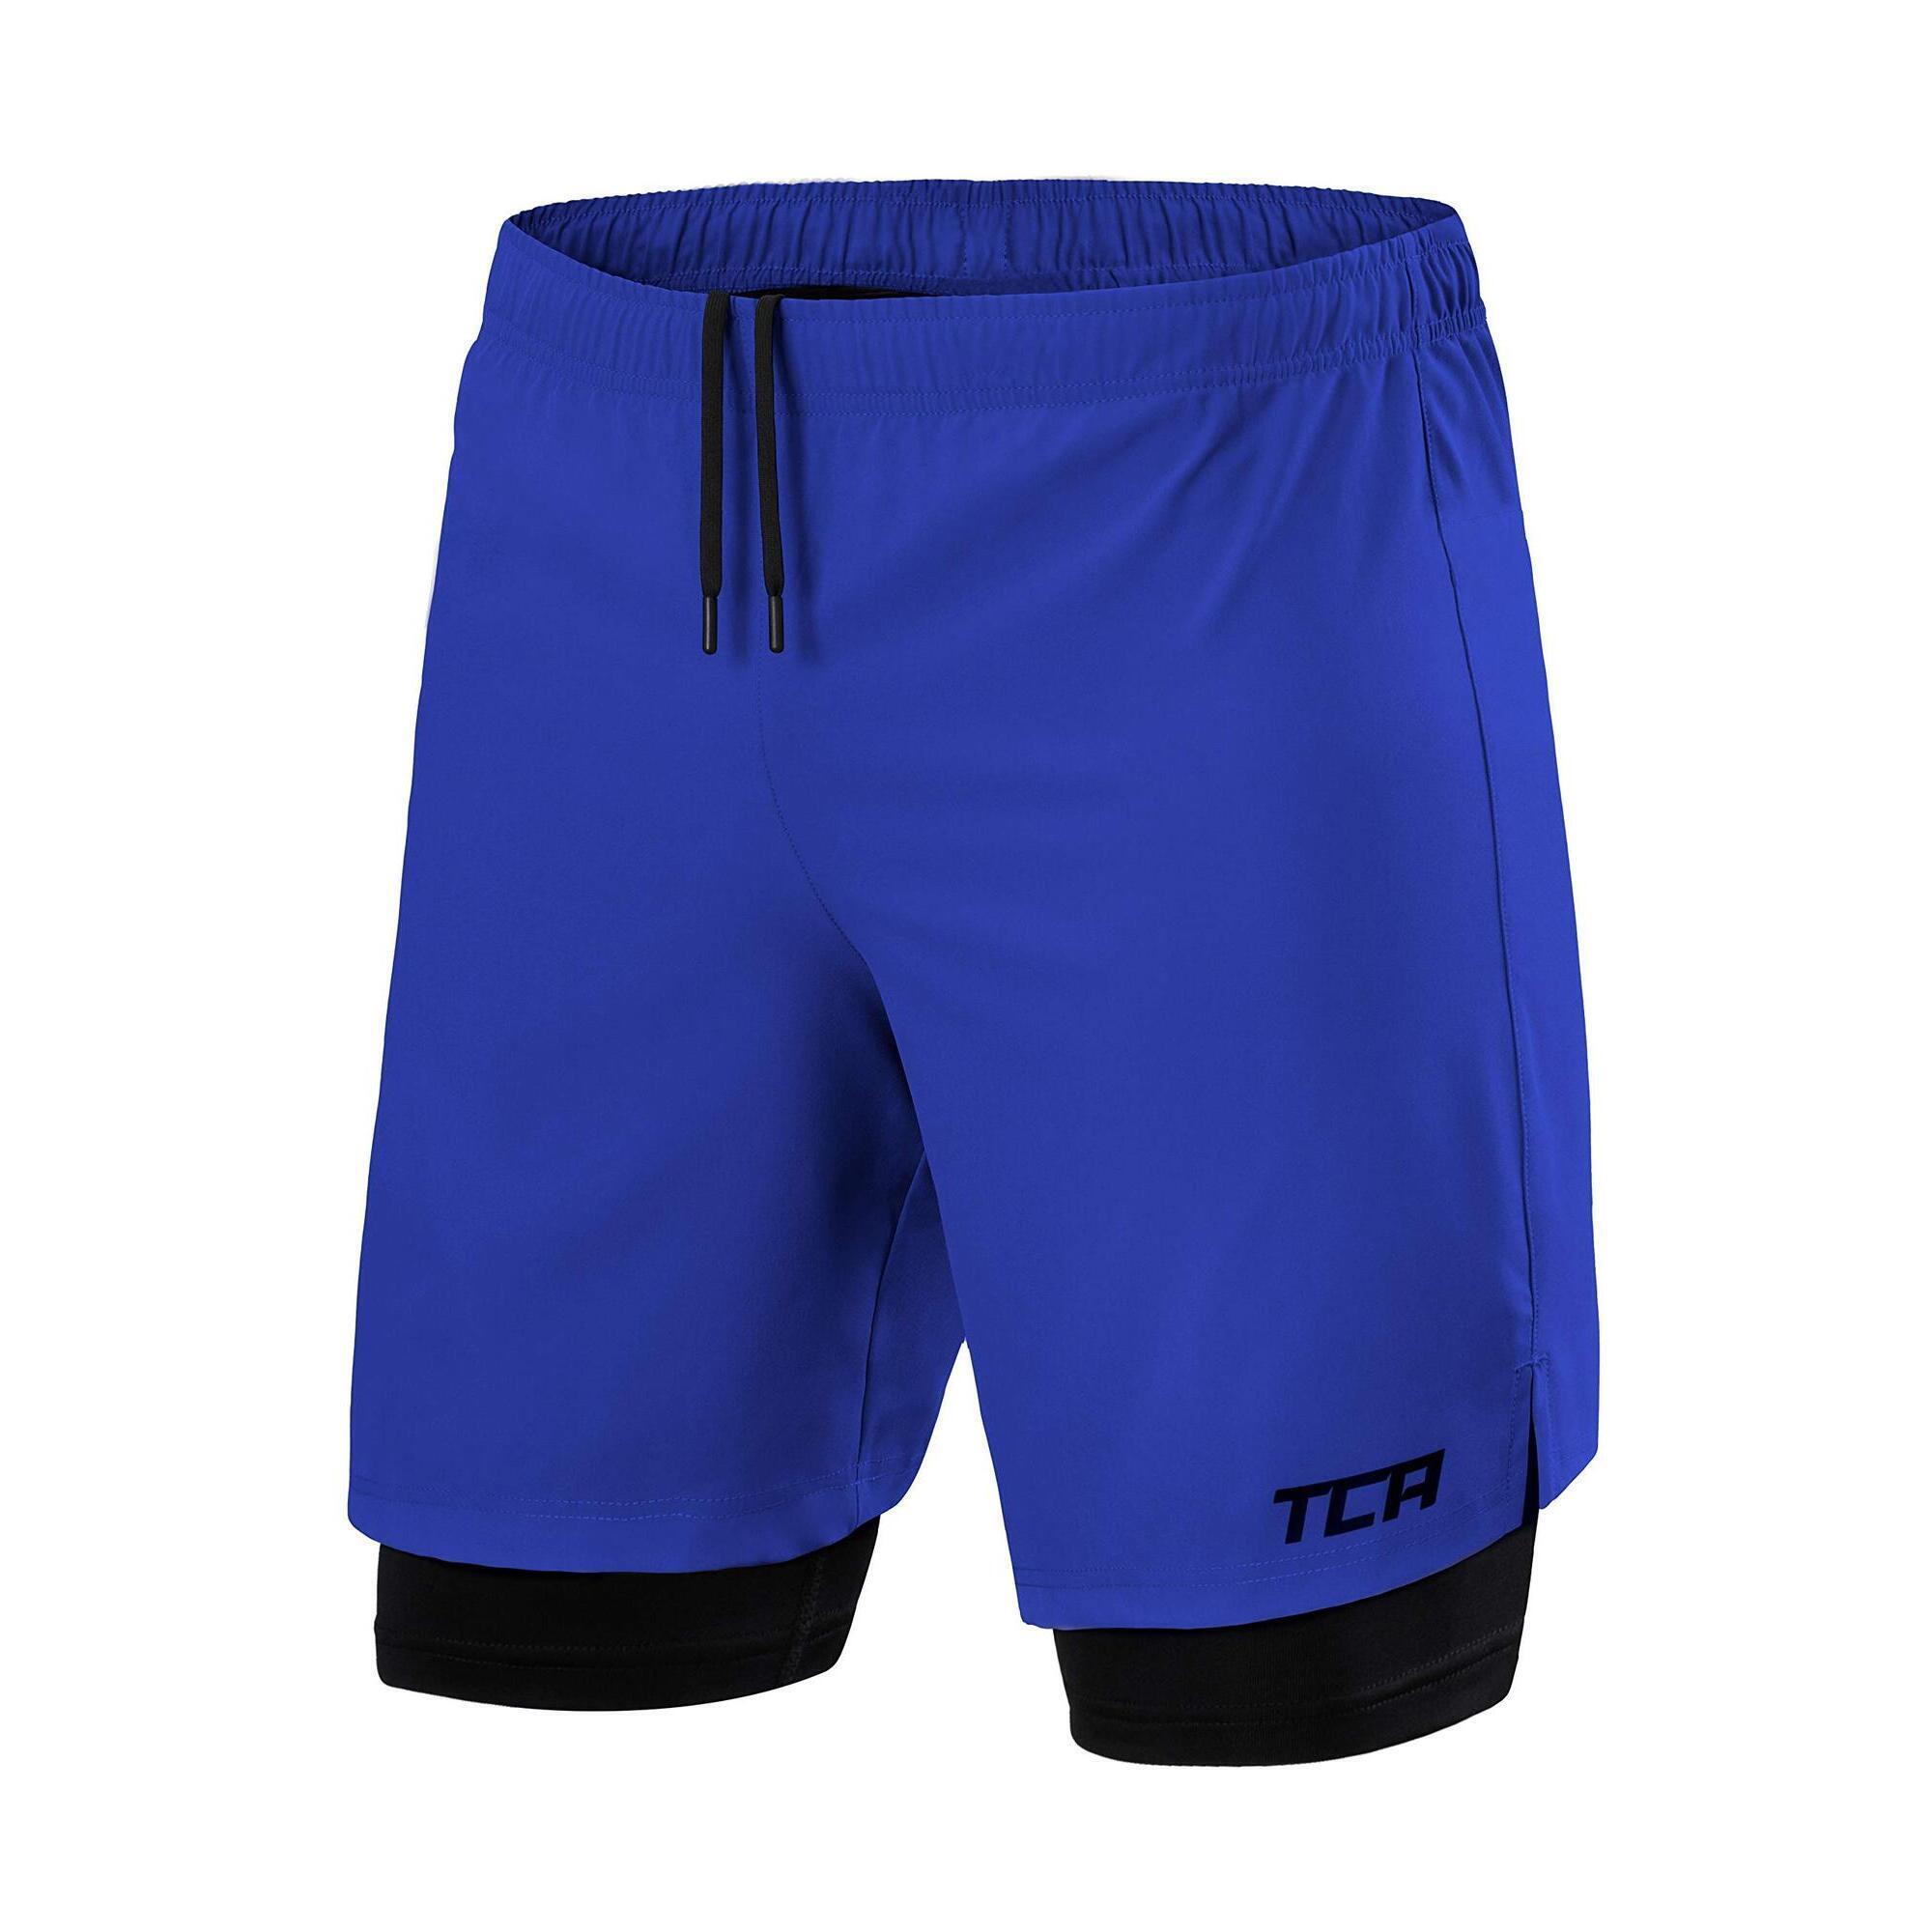 Men's Ultra 2-in-1 Running Shorts with Key Pocket - Cobalt / Black 1/5